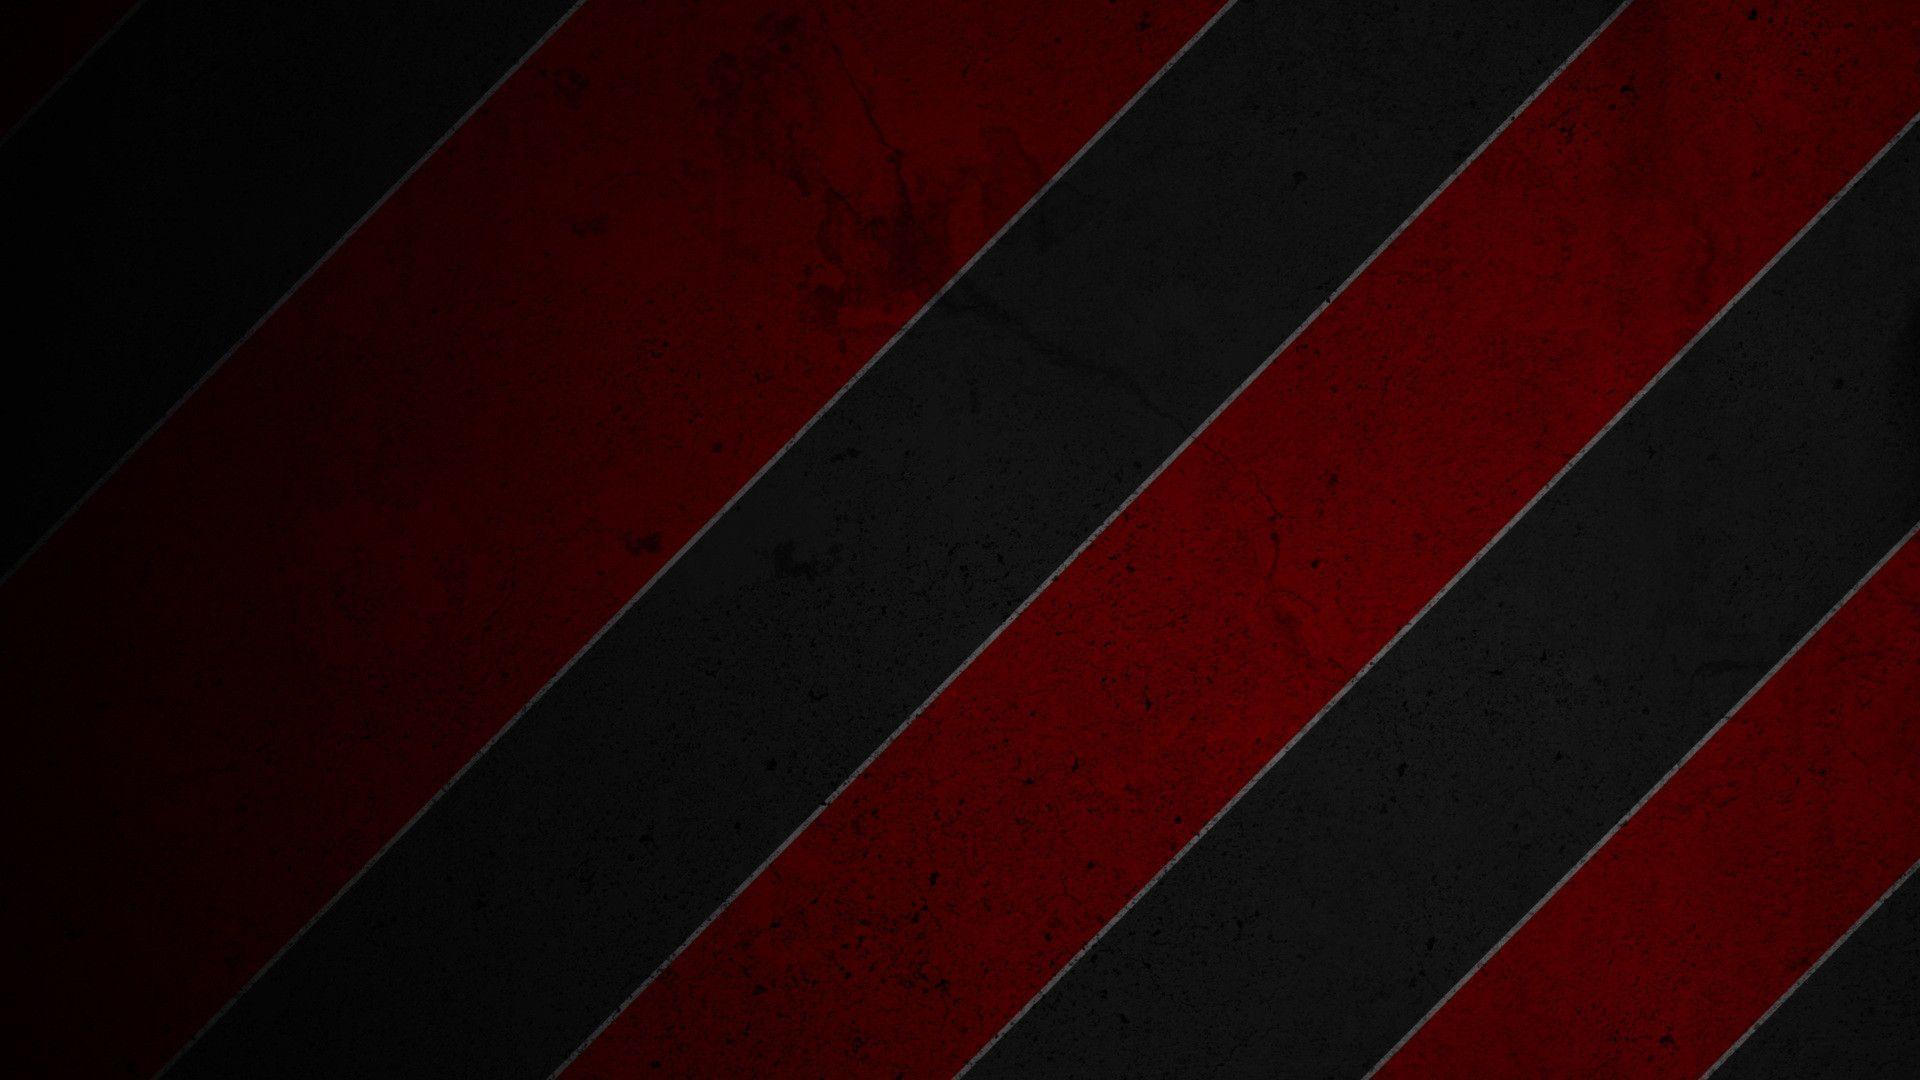 Striped dark black and red backgrounds by Nekokiseki